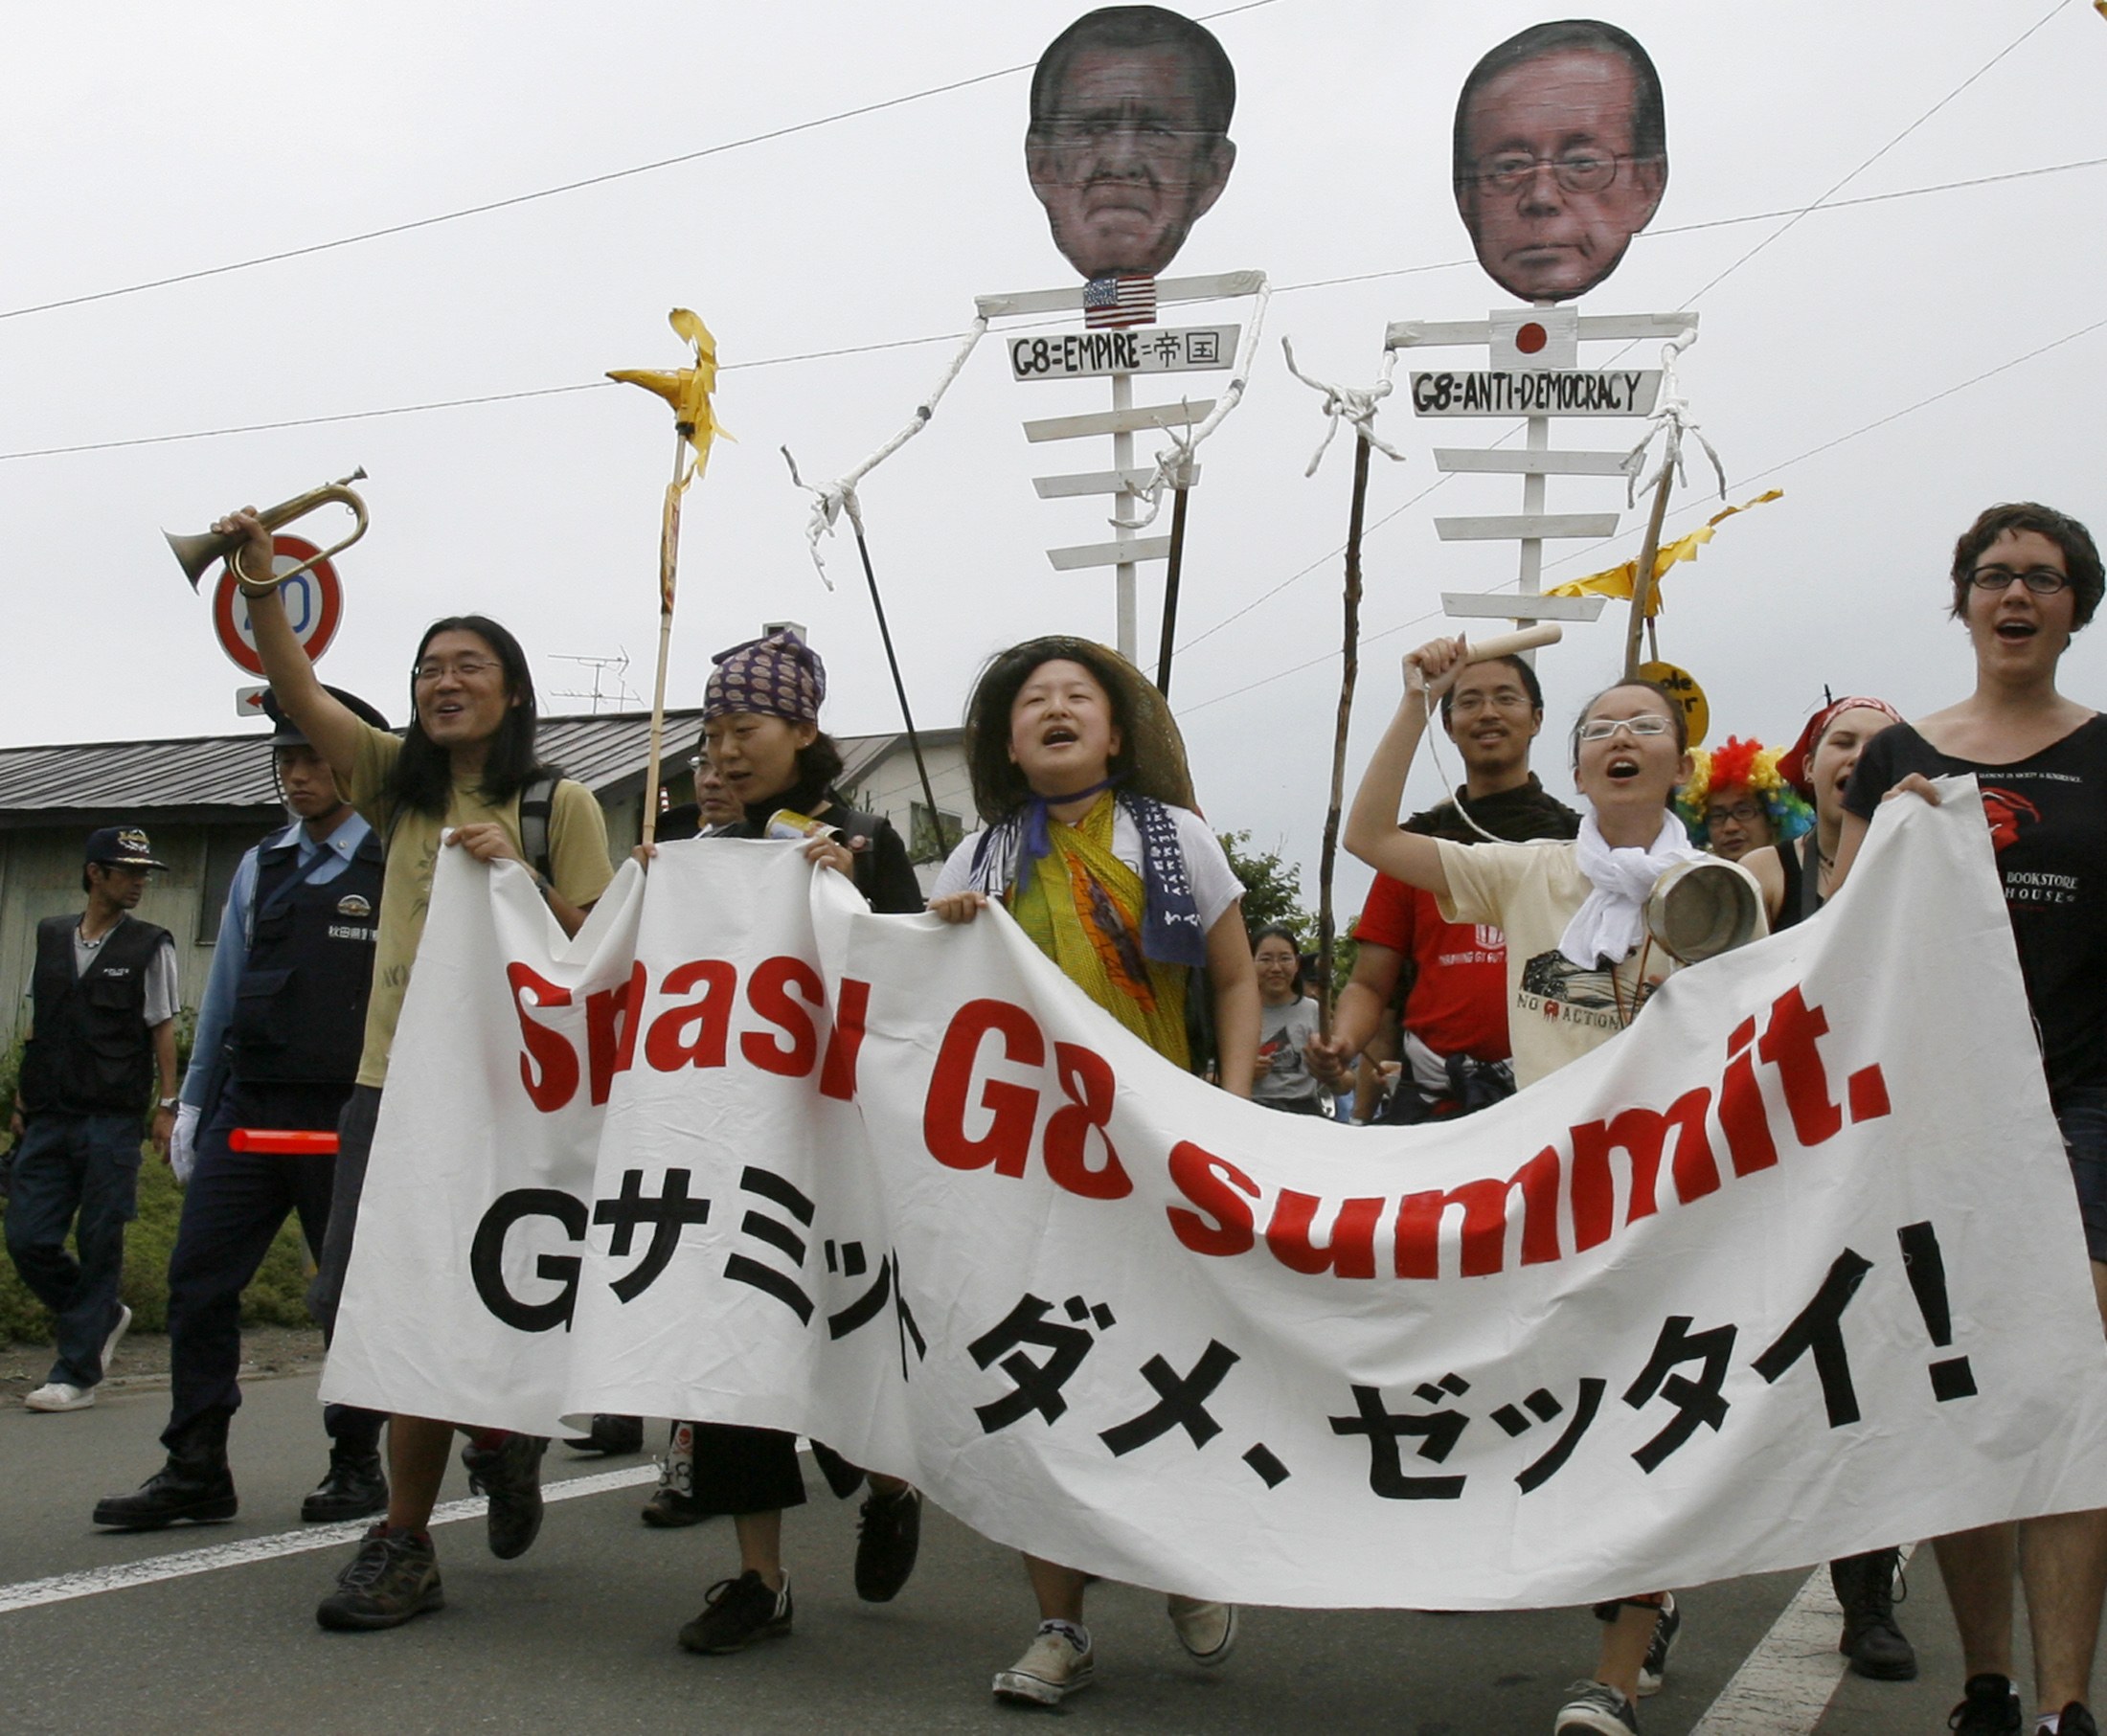 Anti-G8 summit protest